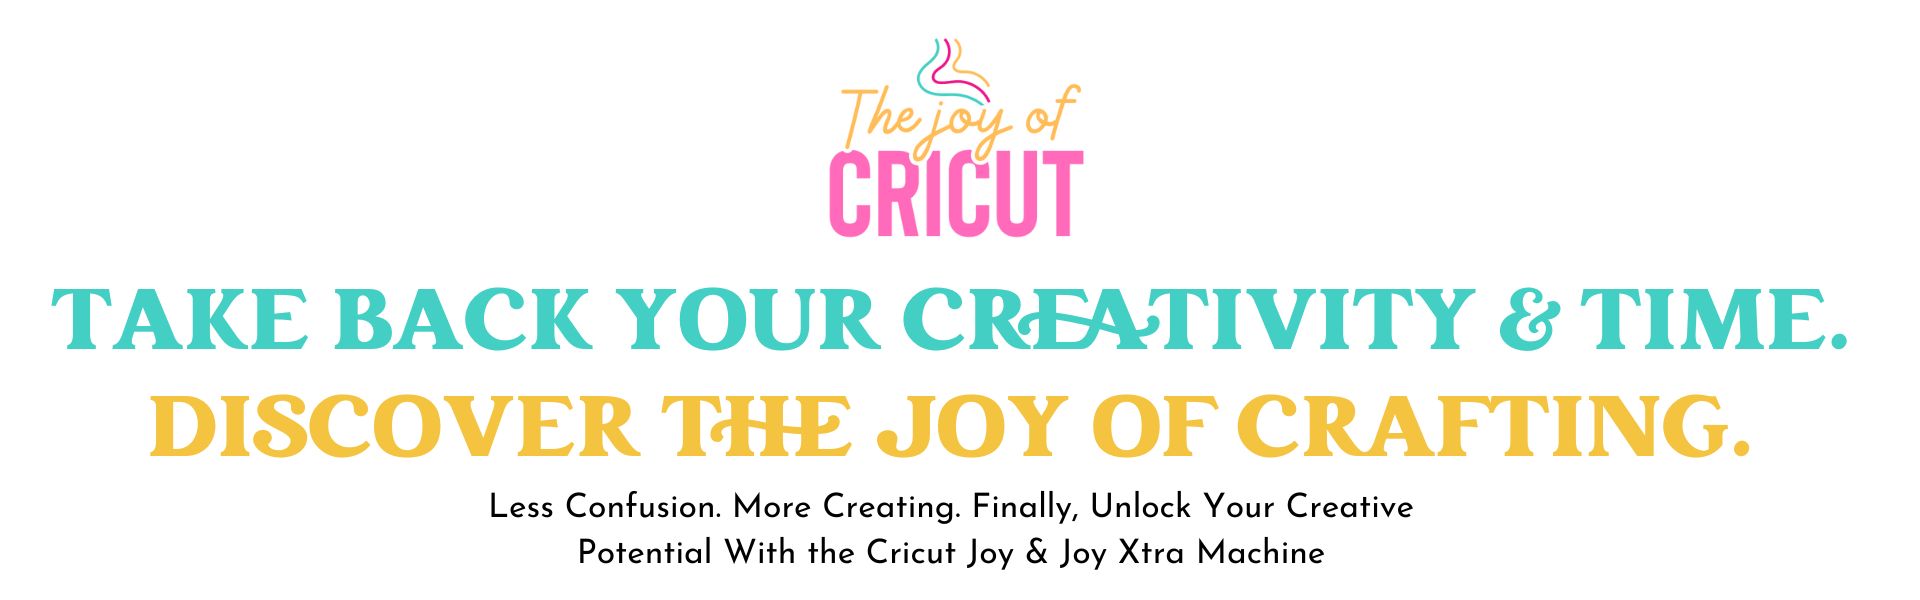 Joy of Cricut hero image that says, Take back your creativity and joy. 